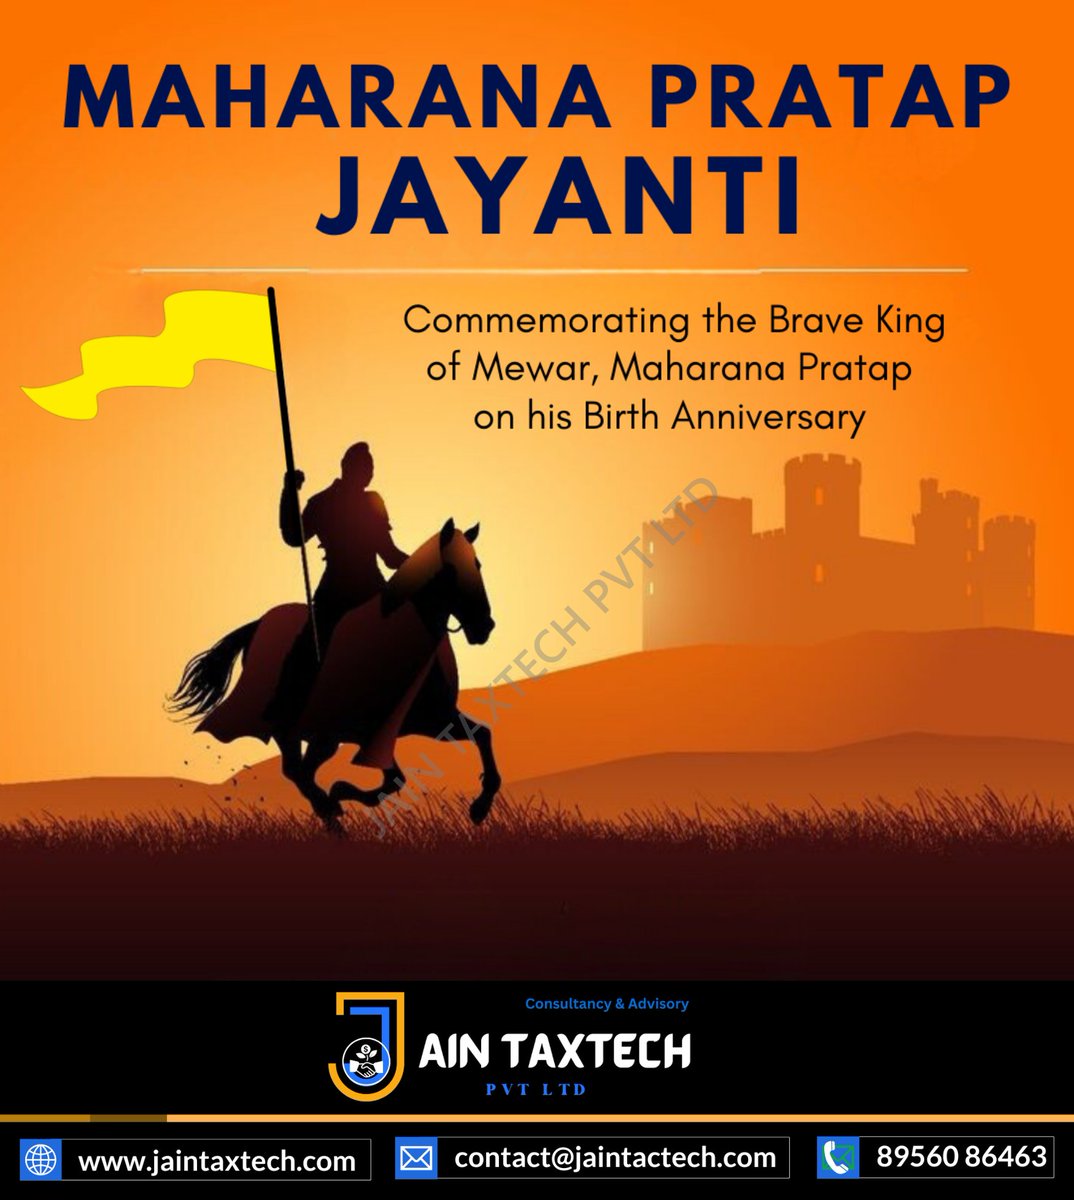 Commemorating Maharana Pratap Jayanti! 🎉🏇 Honoring the Courage, Valor, and Legacy of the Great Rajput Warrior. Jain TaxTech Pays Tribute to Maharana Pratap's Heroic Spirit! 🌟🏰 #MaharanaPratapJayanti #Courage #Legacy #JainTaxTech #Rajput #AccountingServices #TaxConsultants